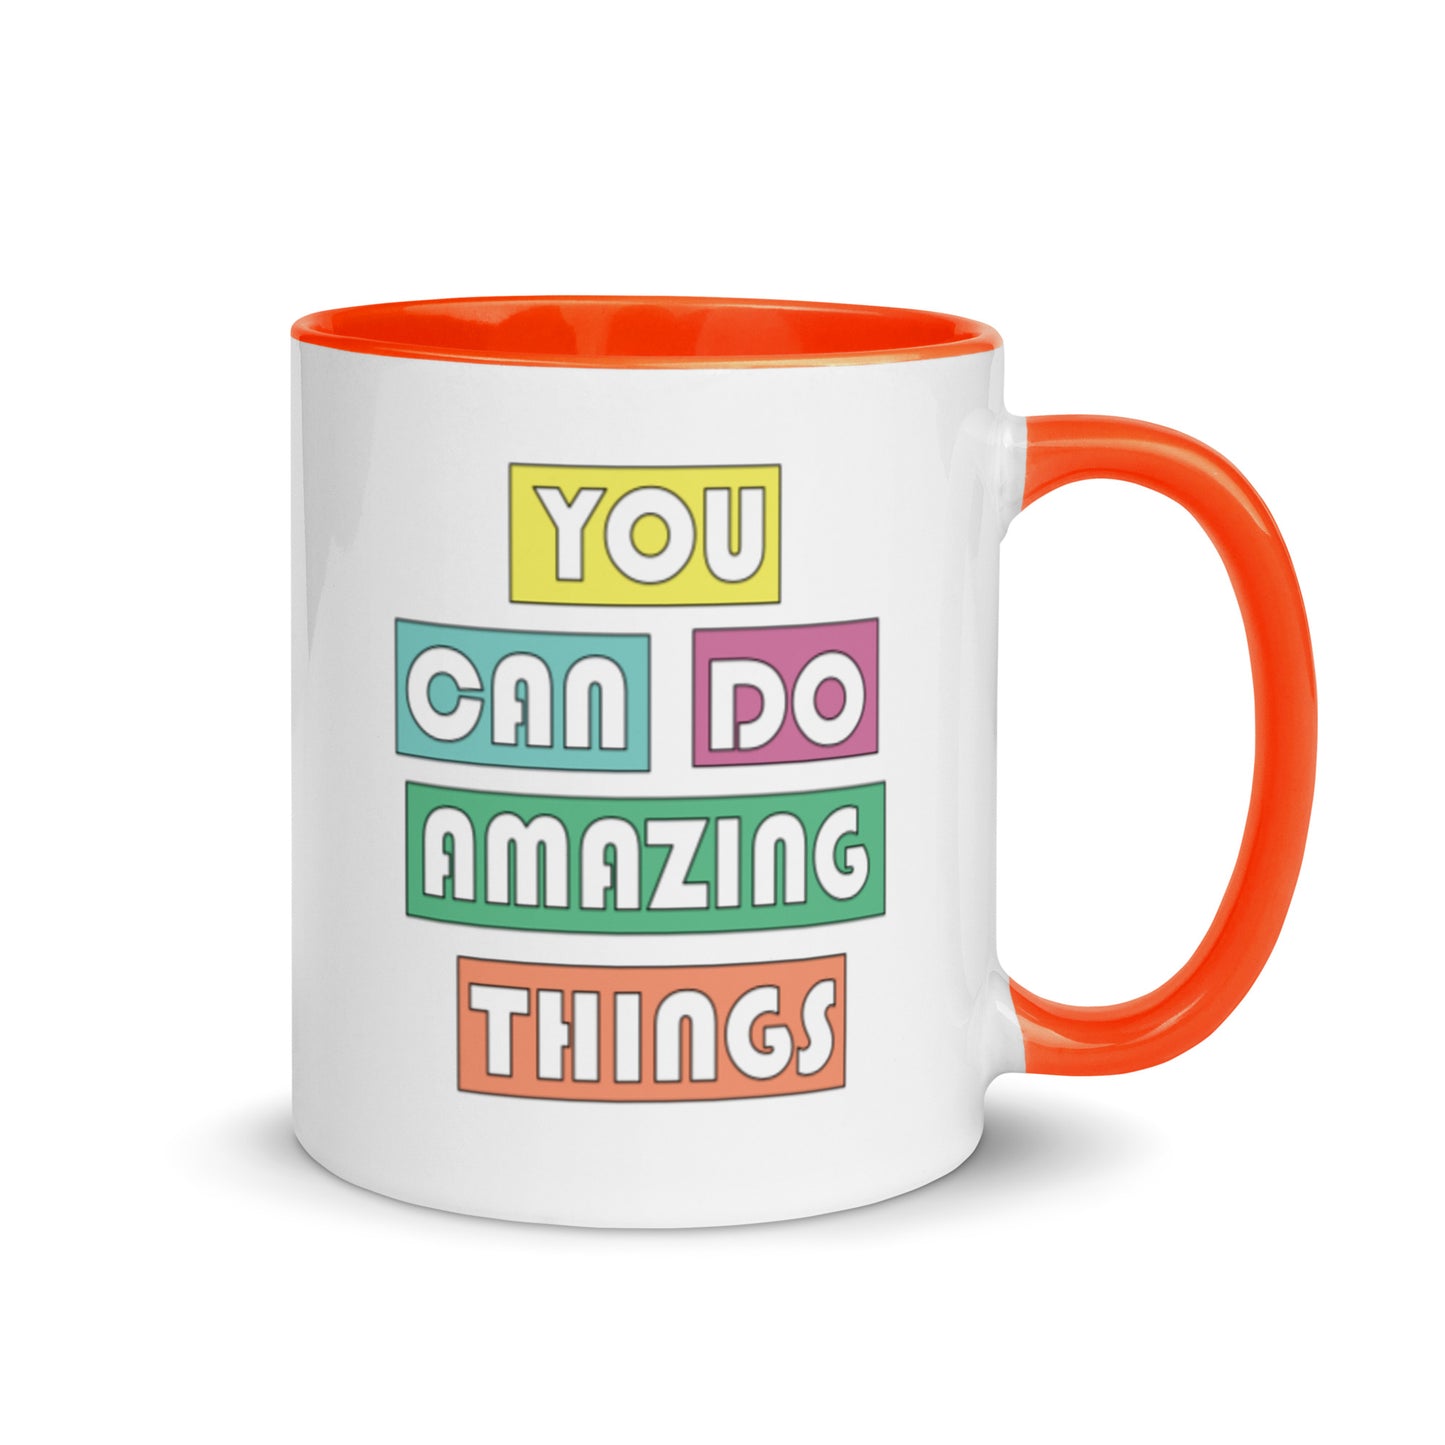 you can do amazing things mug with orange interior